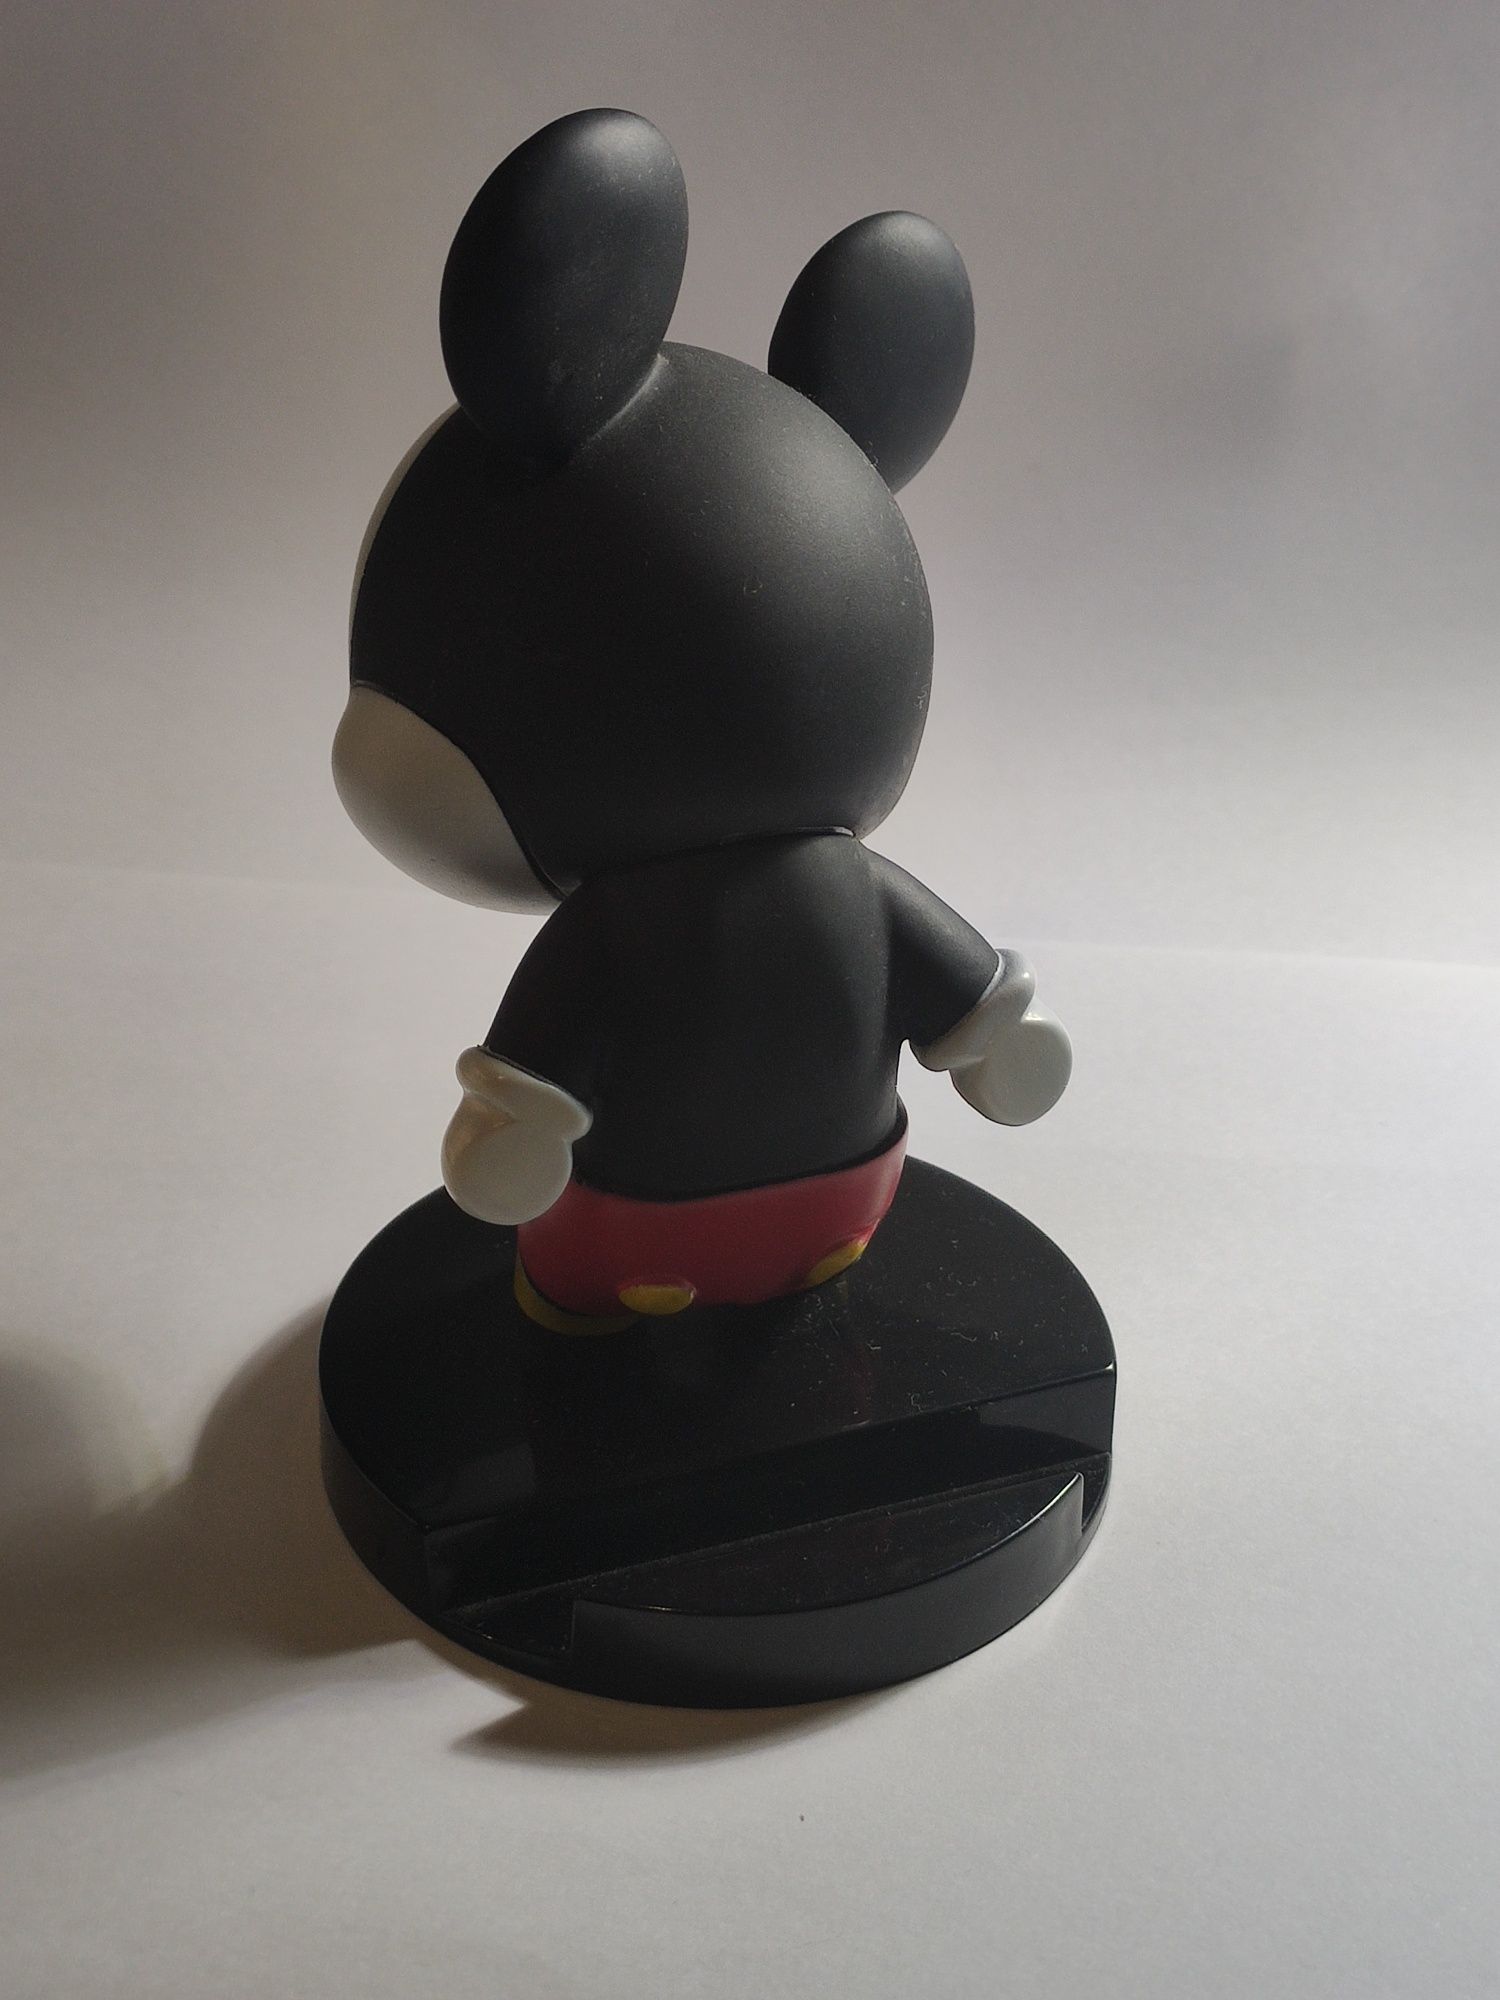 Phone stand / segurador de telemóvel do Mickey mouse oficial da Disney